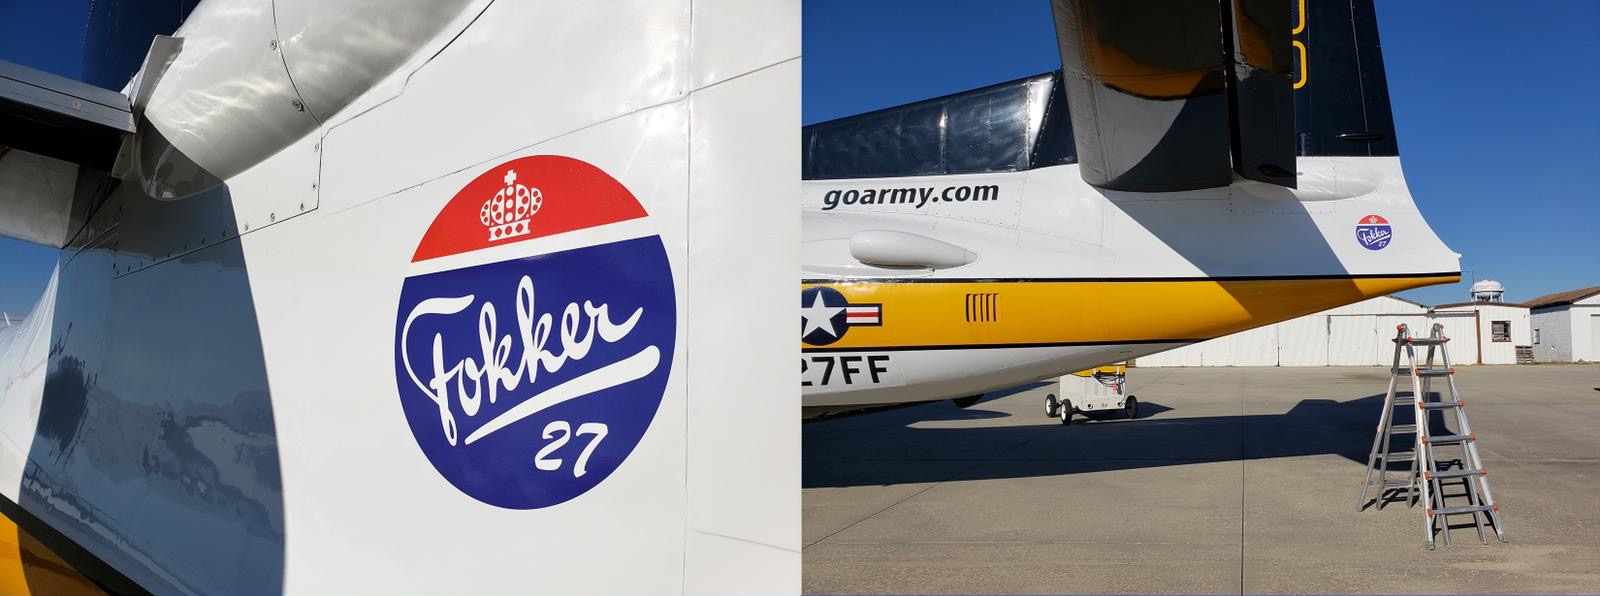 Je bekijkt nu Fokker logo terug op ‘Excalibur’